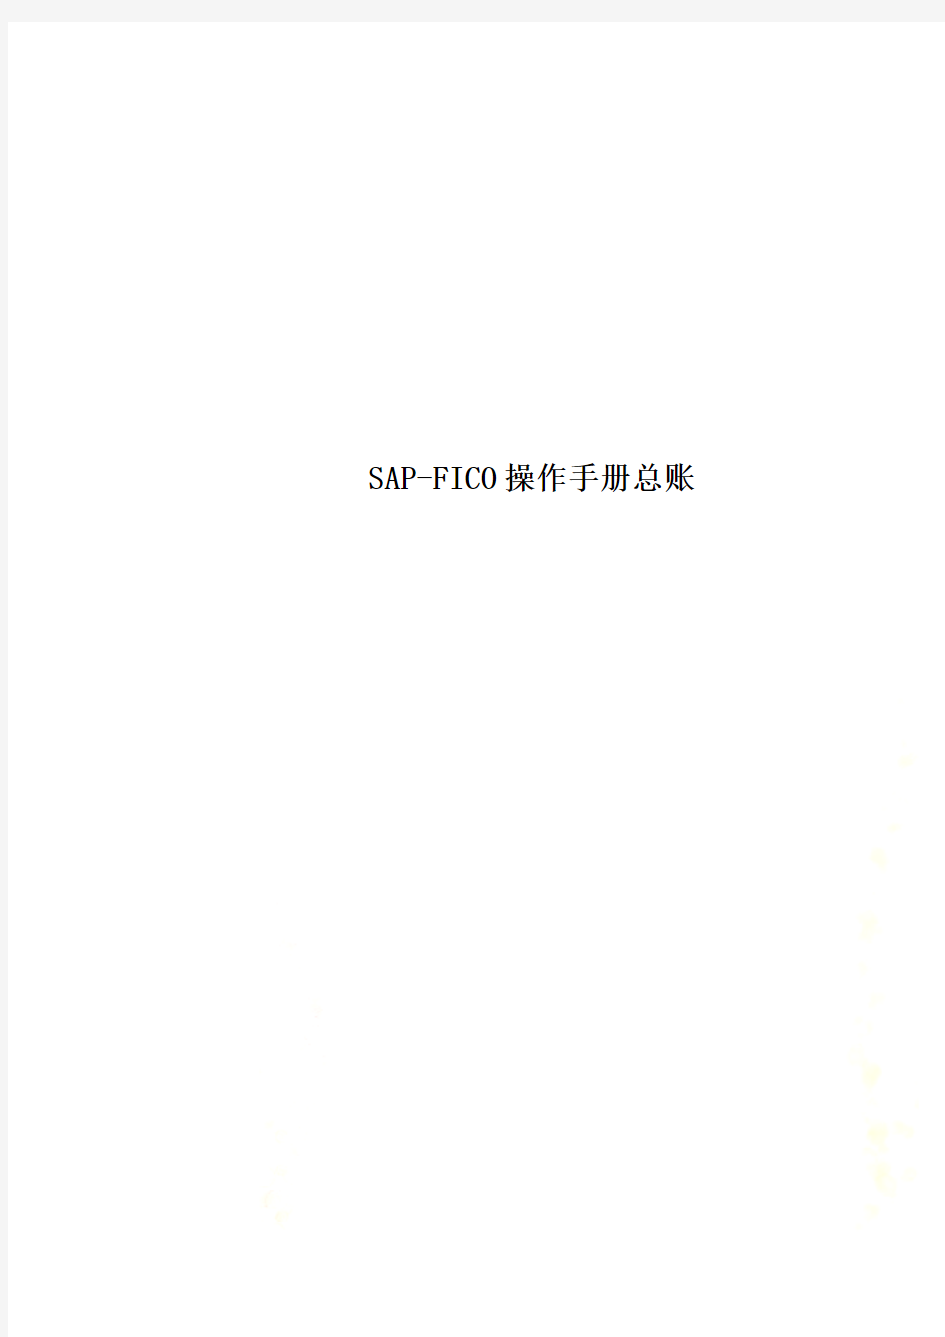 SAP-FICO操作手册总账